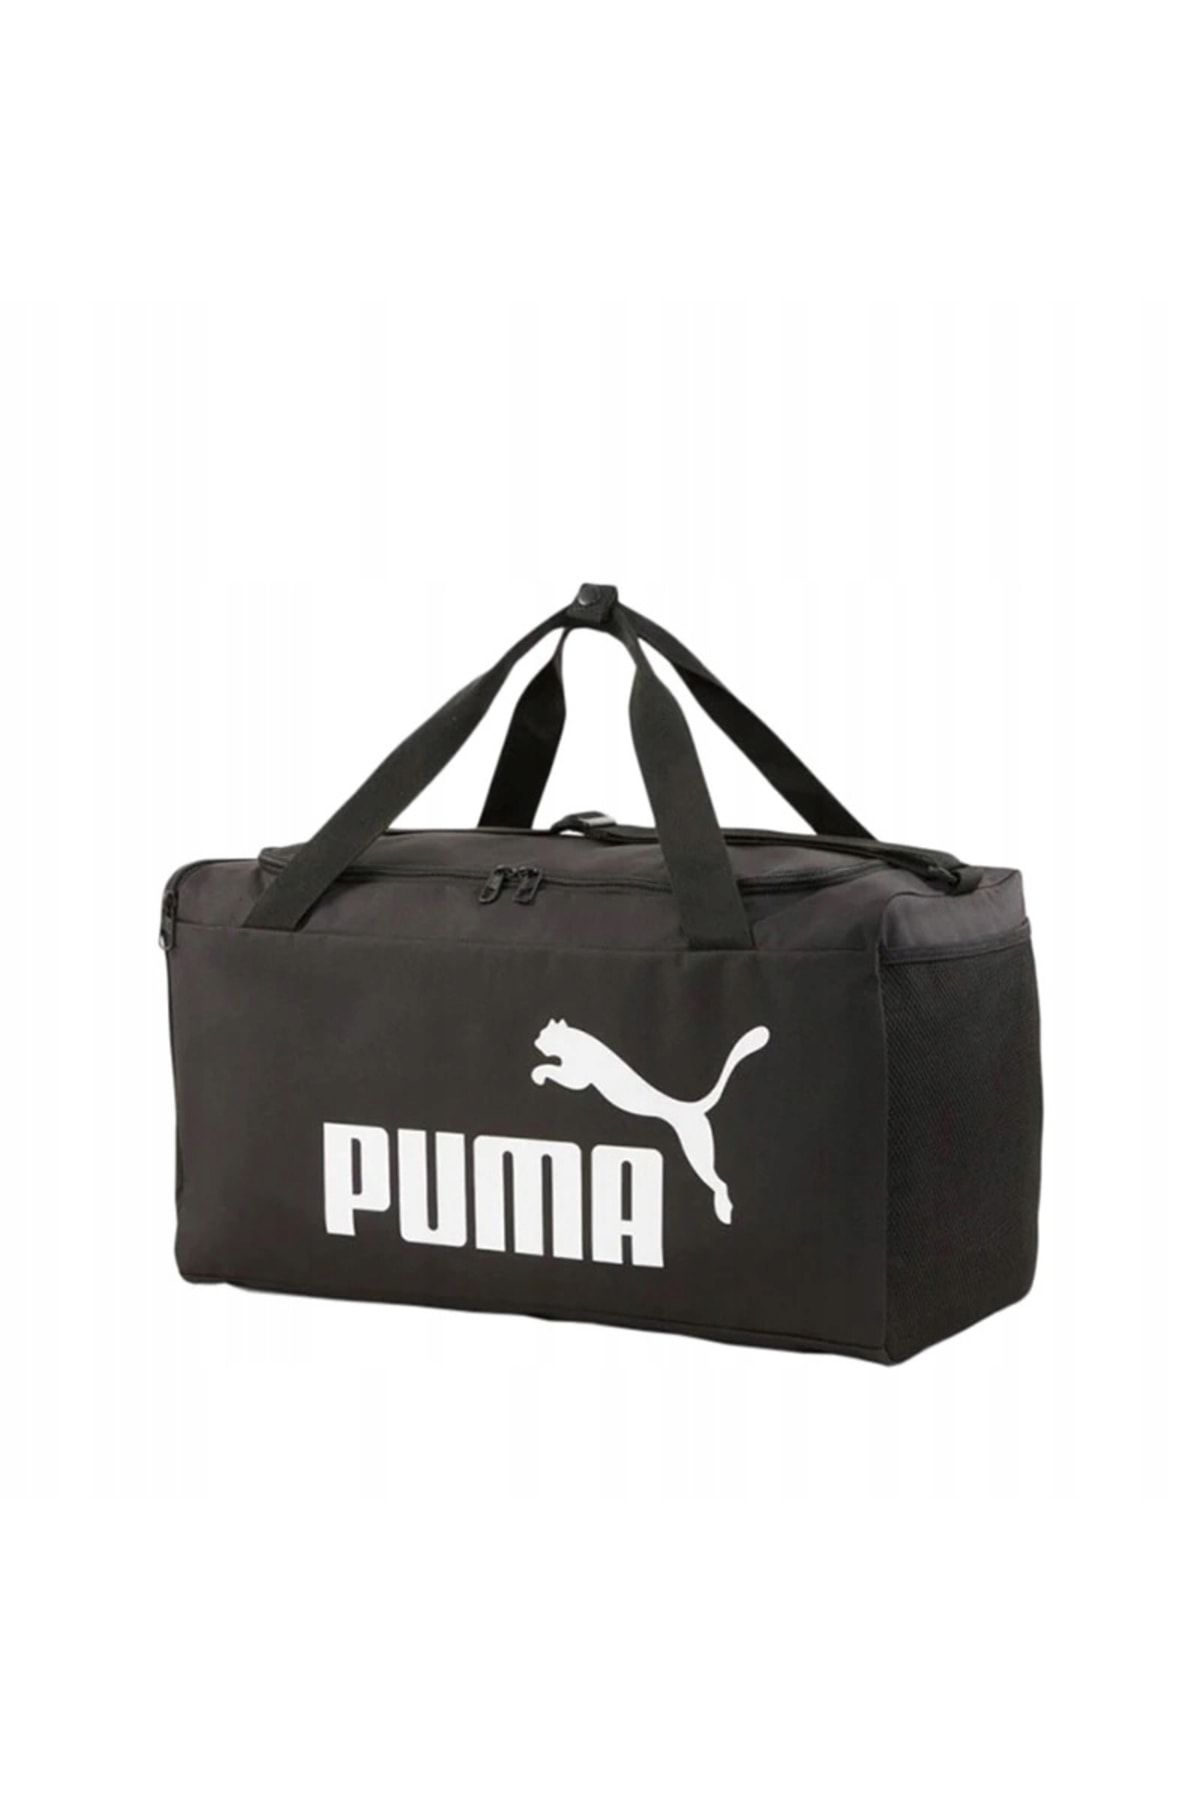 Puma Elemental Spor Çanta M Black 07907301